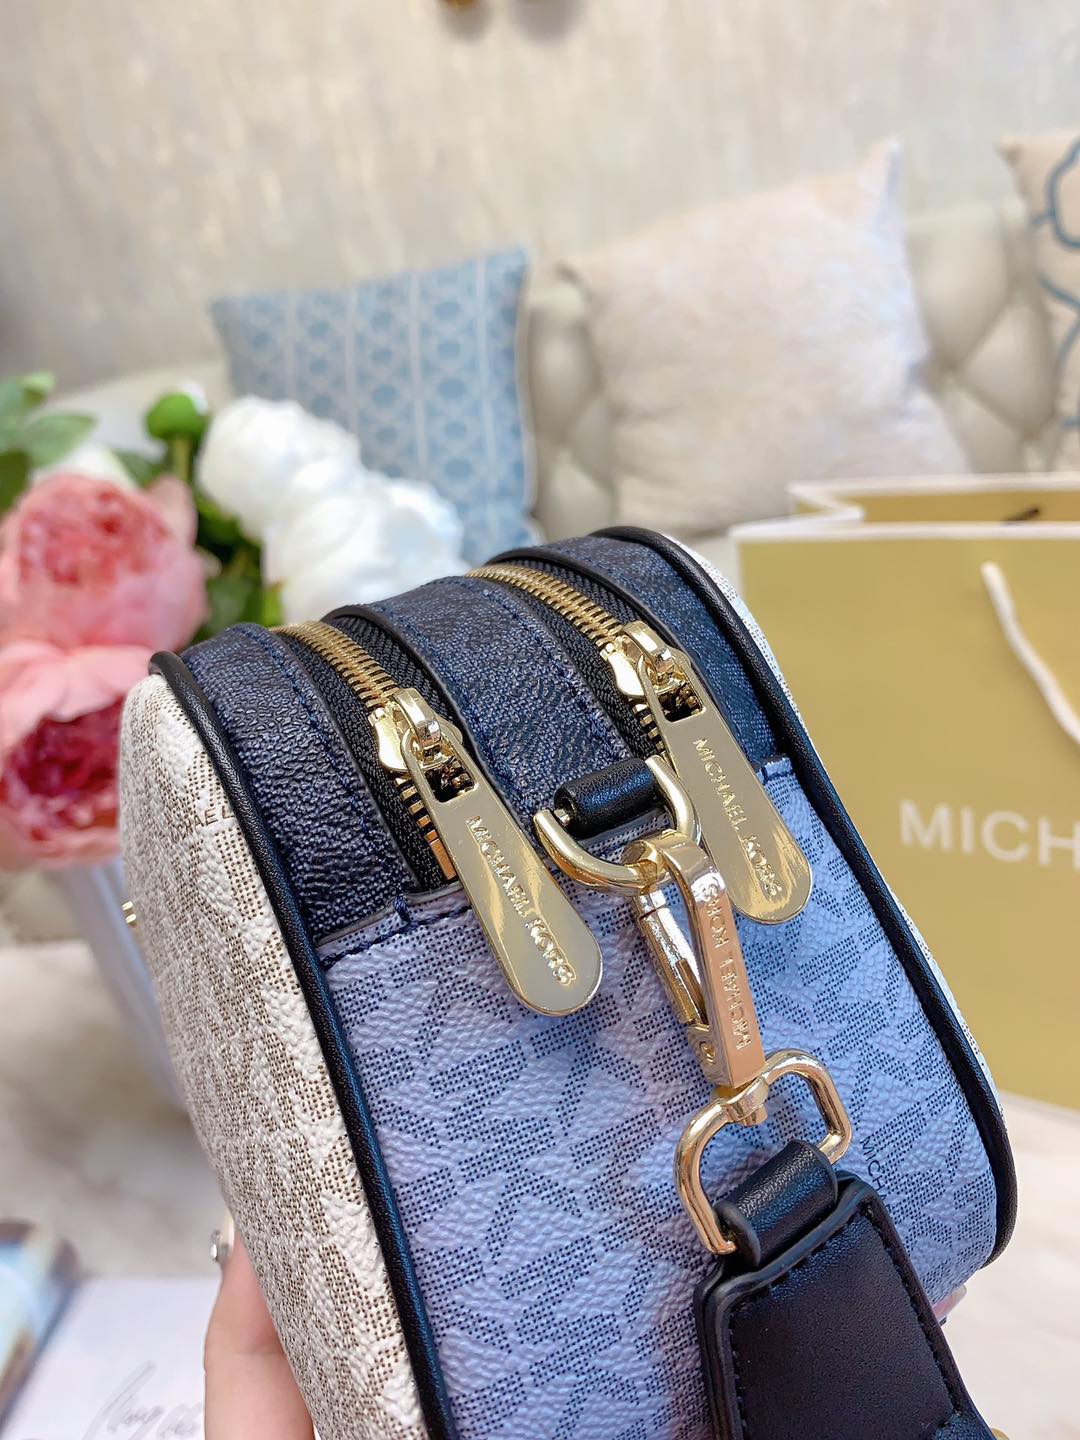 DK MK Michael Kors Camera Bag Sling Bag Authentic Quality On Sale